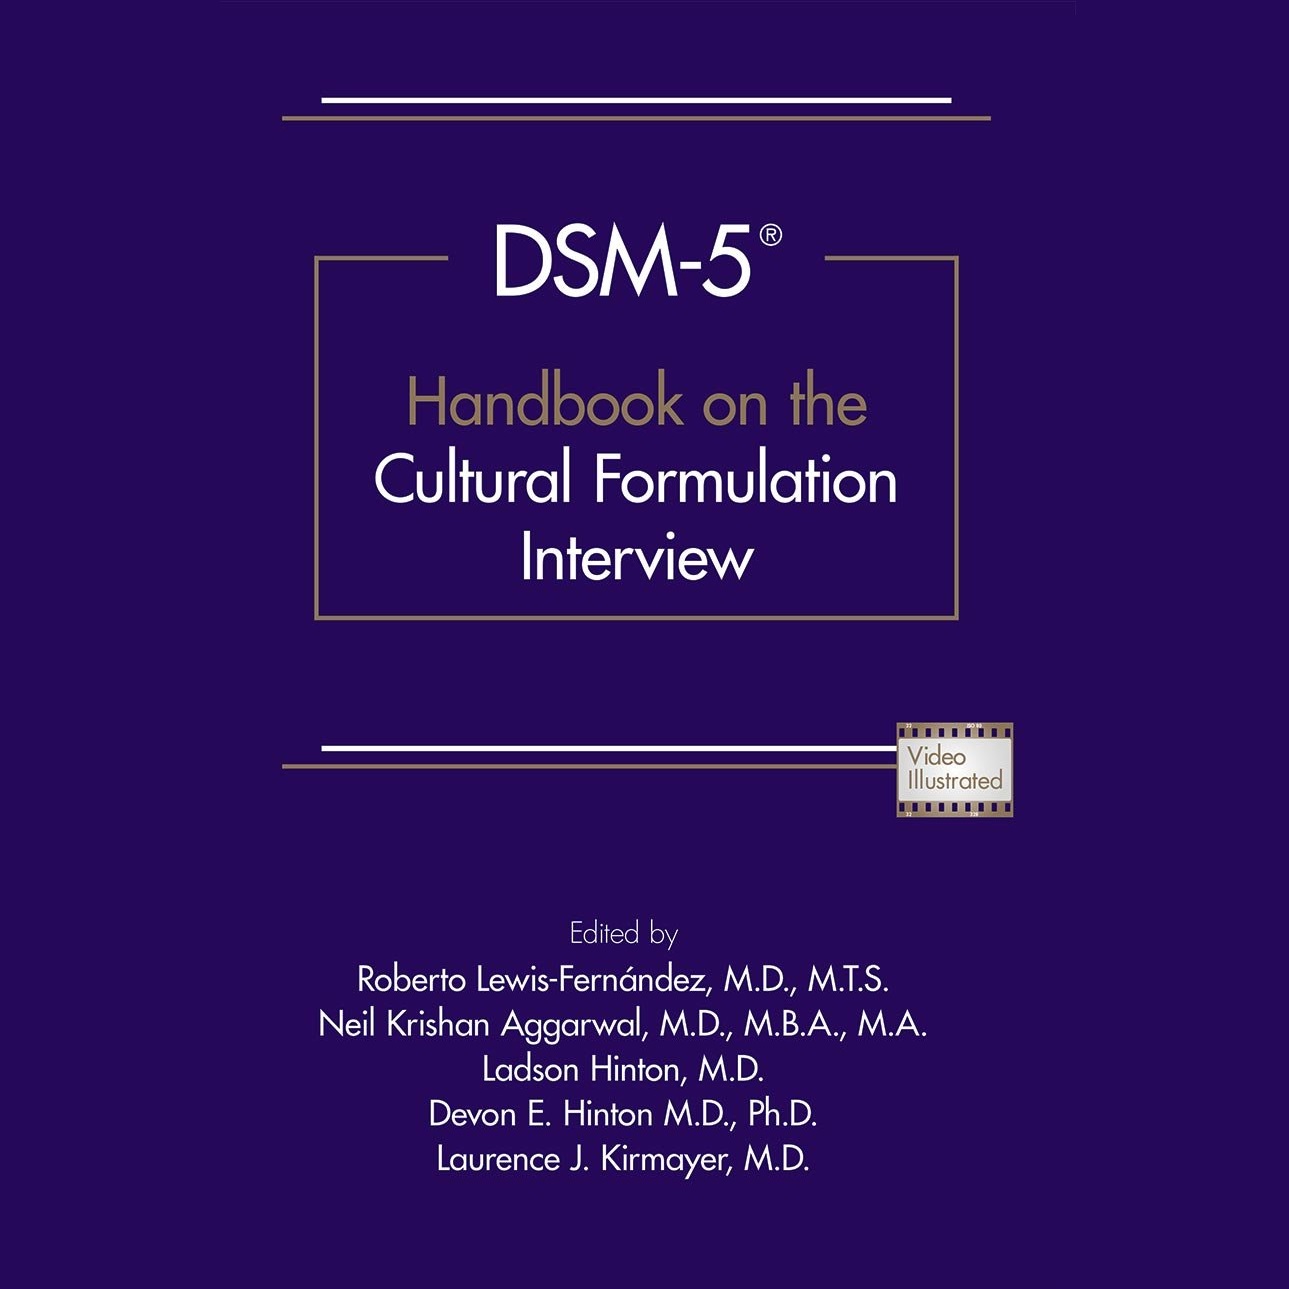 DSM-5 Handbook on the Cultural Formulation Interview logo